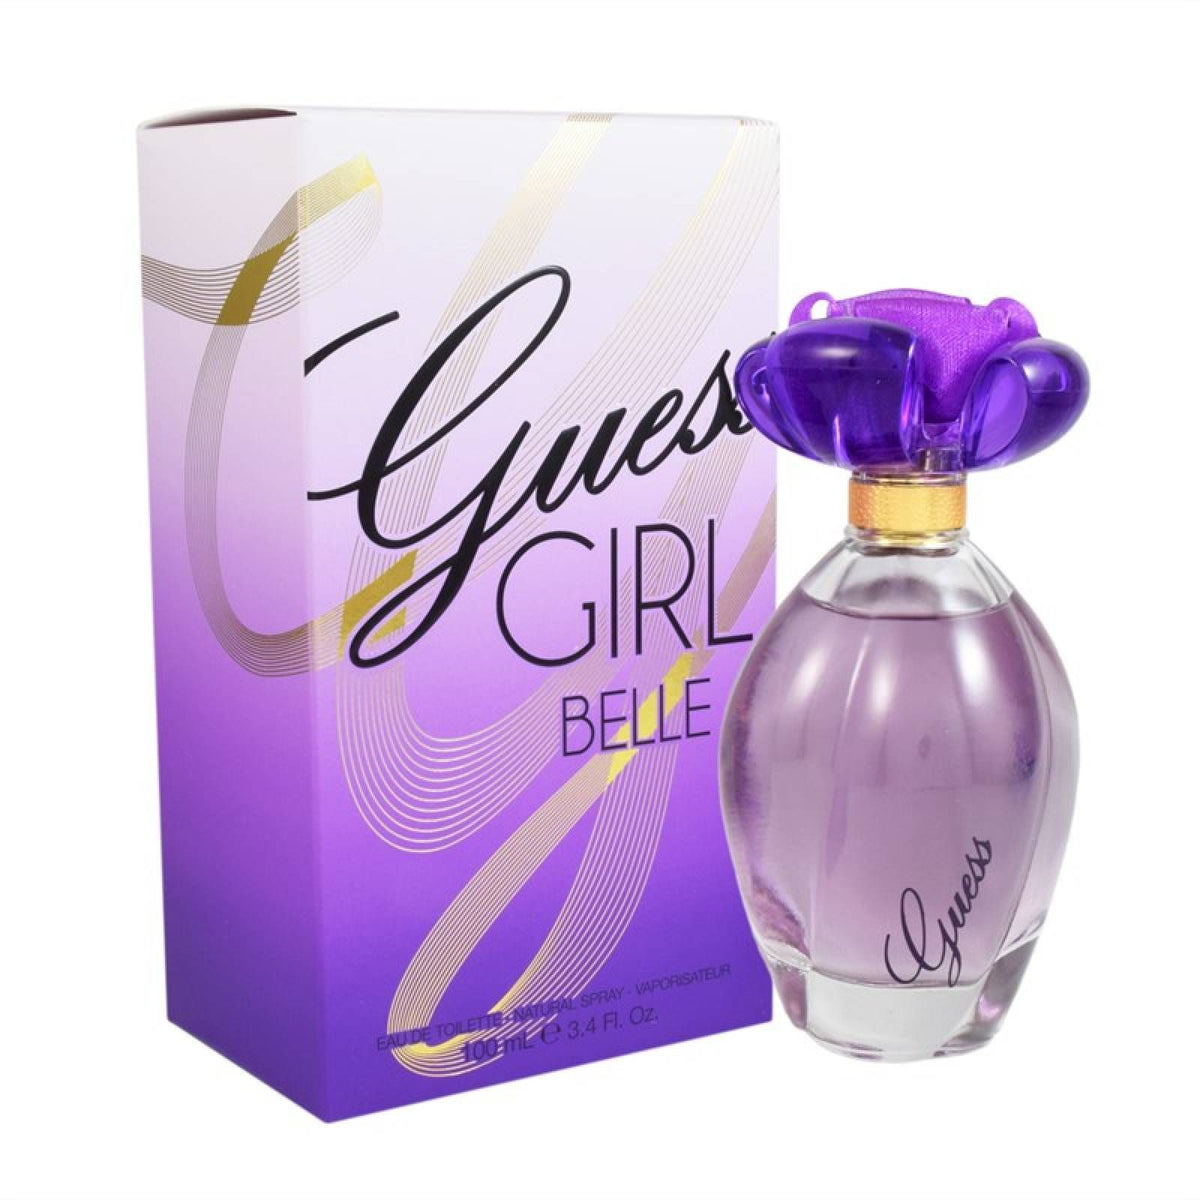 Guess Girl Belle Parfumeriemx